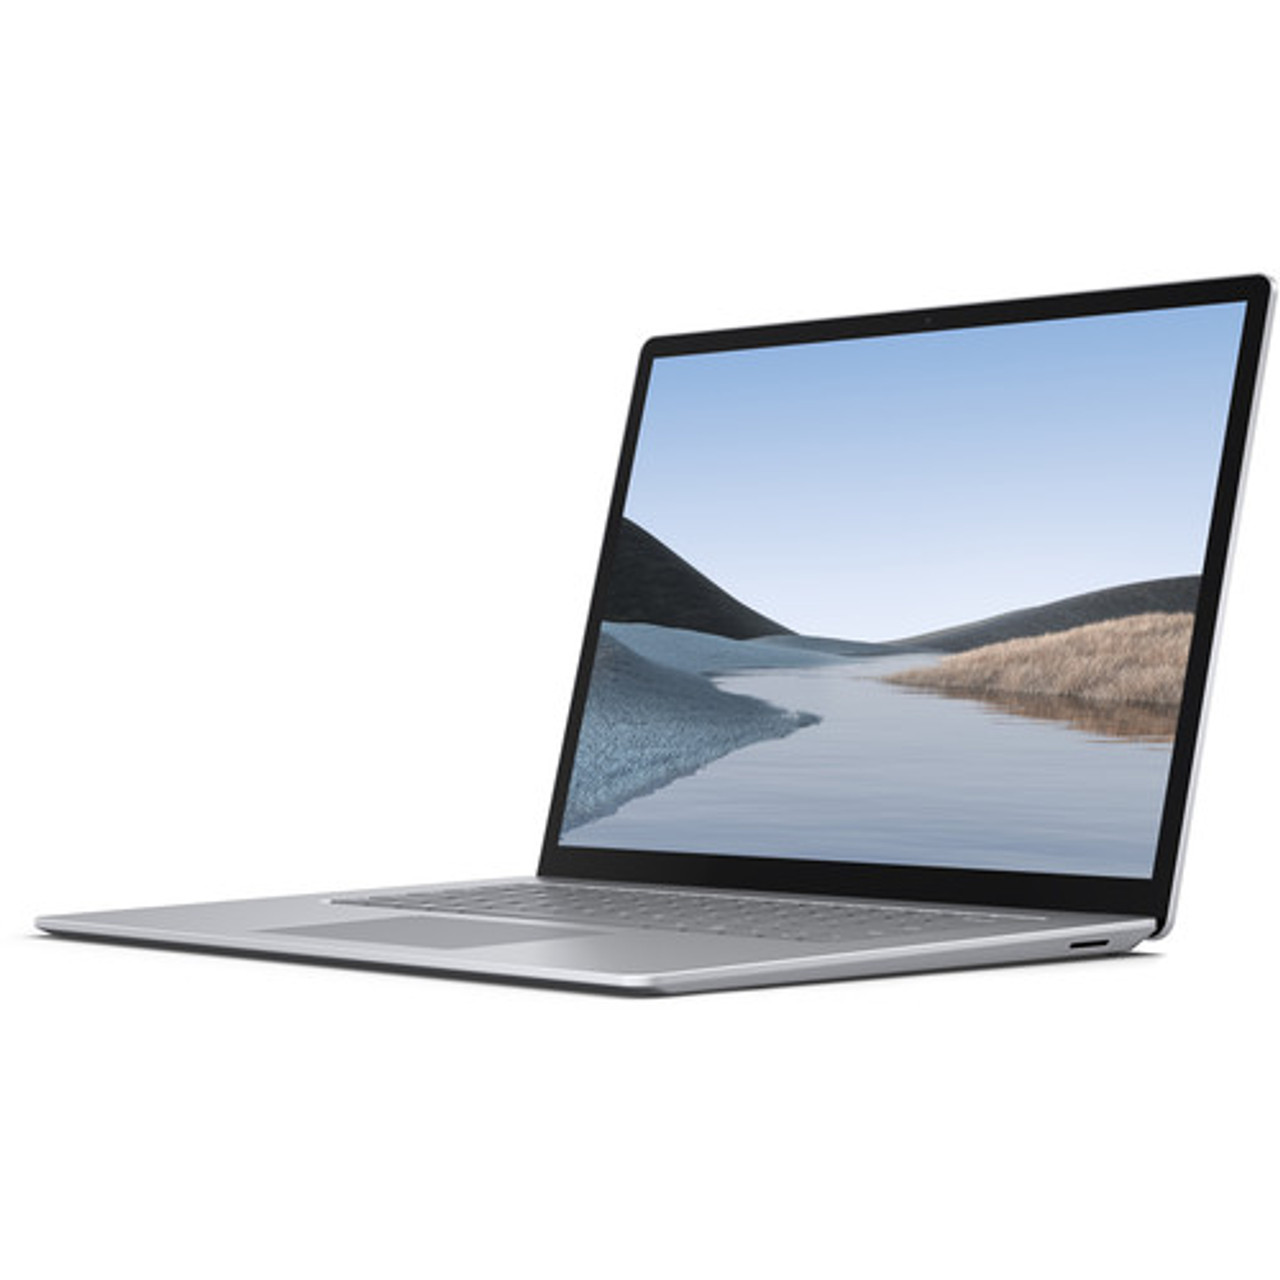 Microsoft Surface Laptop 3 – AMD Ryzen 5, 16GB RAM, 256GB SSD, 15